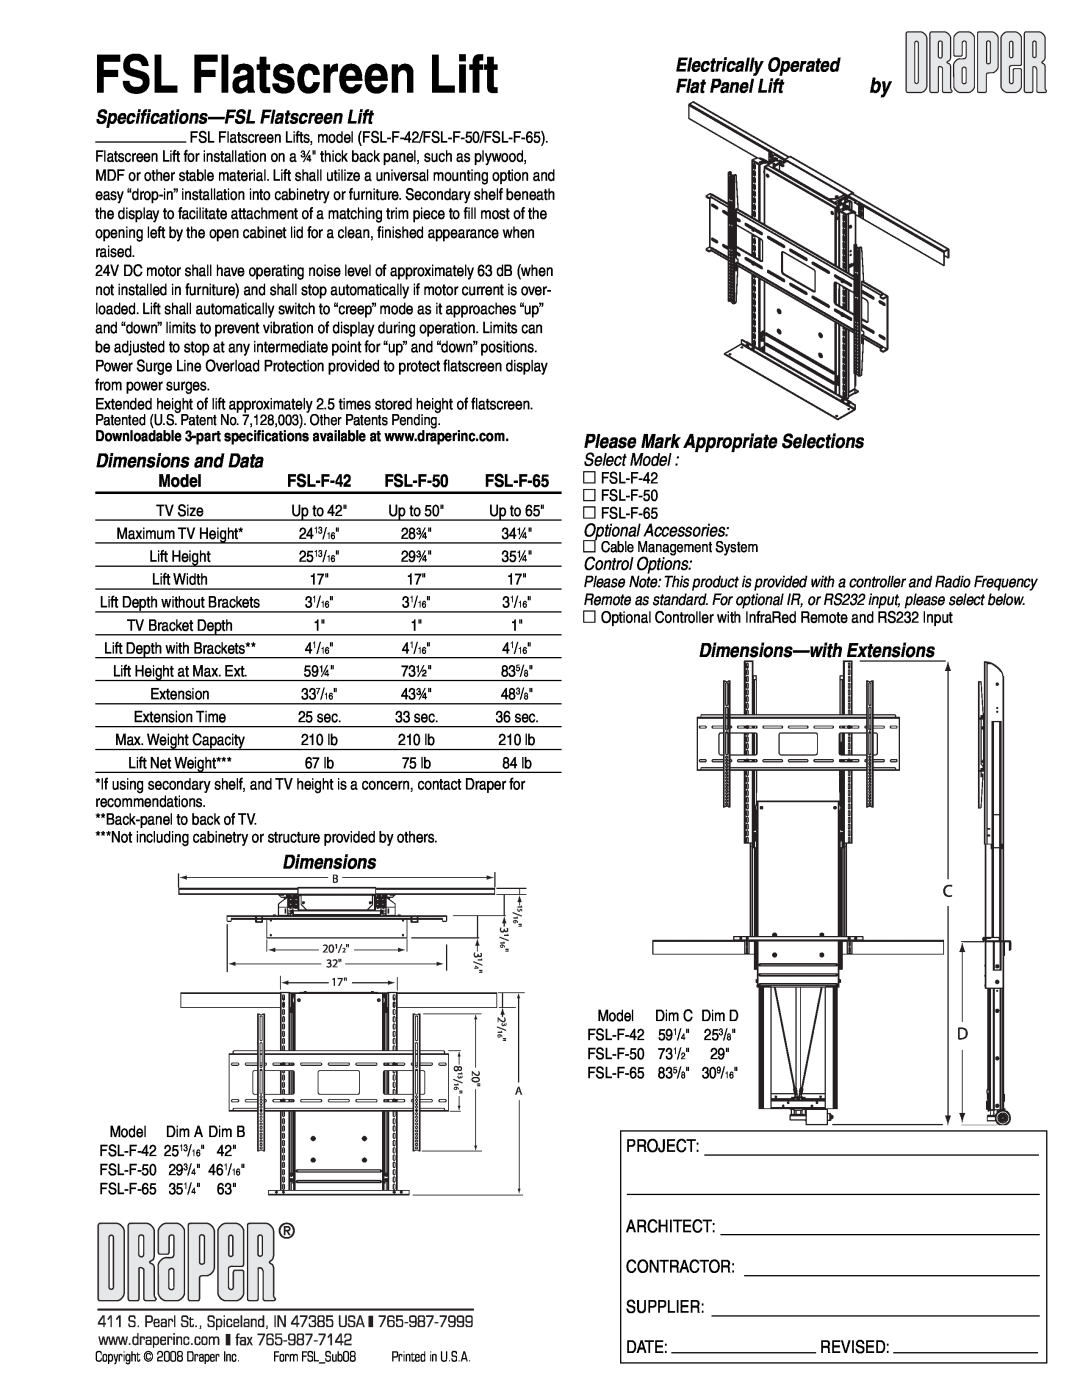 Draper FSL-F-42 specifications FSL Flatscreen Lift, Speciﬁcations-FSLFlatscreen Lift, Dimensions and Data, Flat Panel Lift 